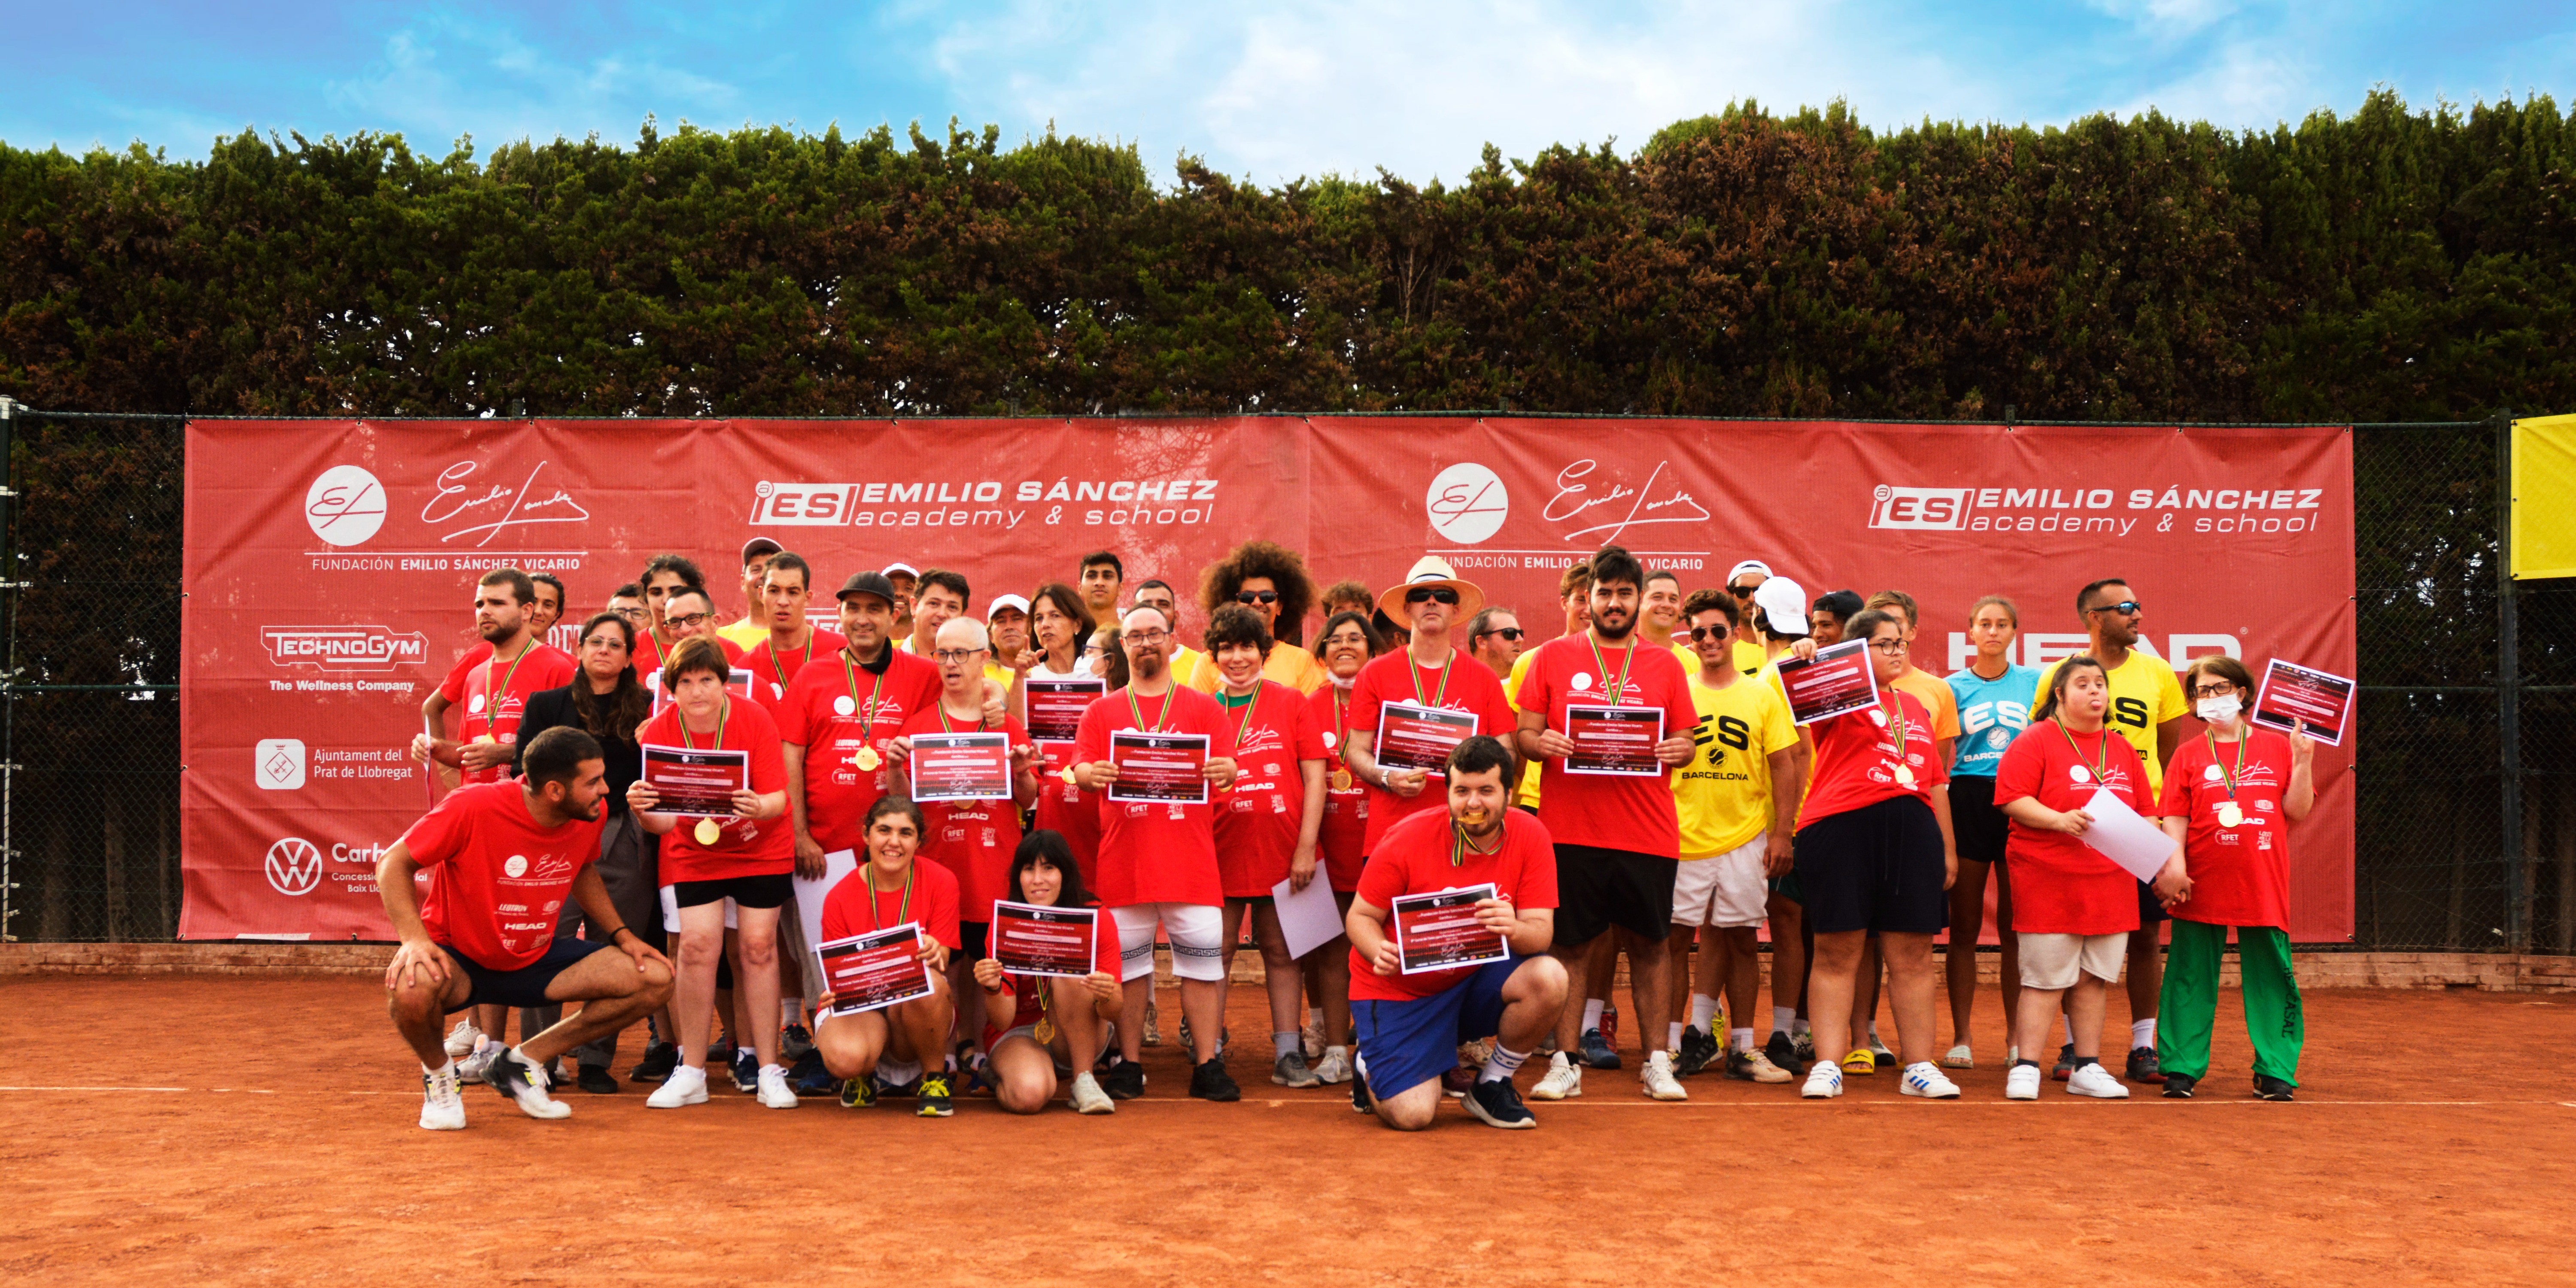 Closing Ceremony 8th Adaptive FESV Tennis School Course at the Emilio Sánchez Academy.